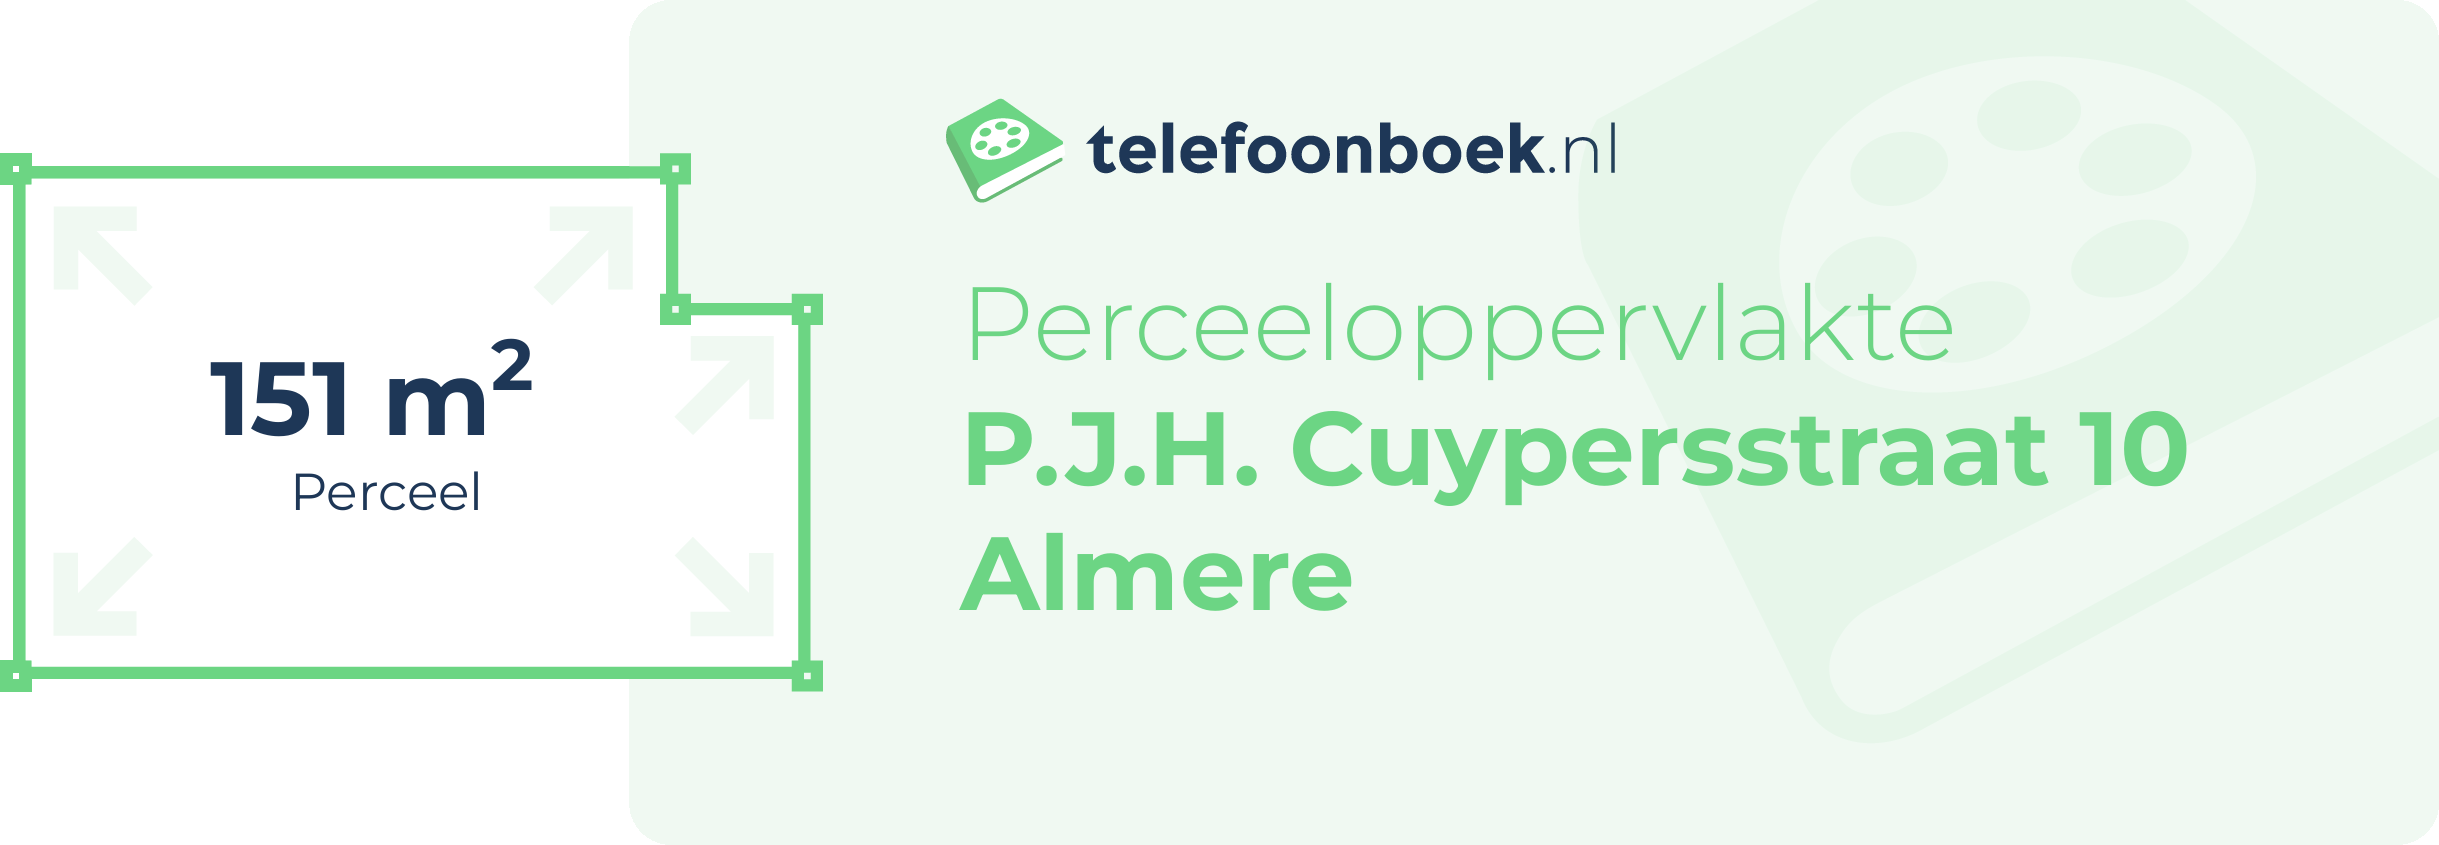 Perceeloppervlakte P.J.H. Cuypersstraat 10 Almere